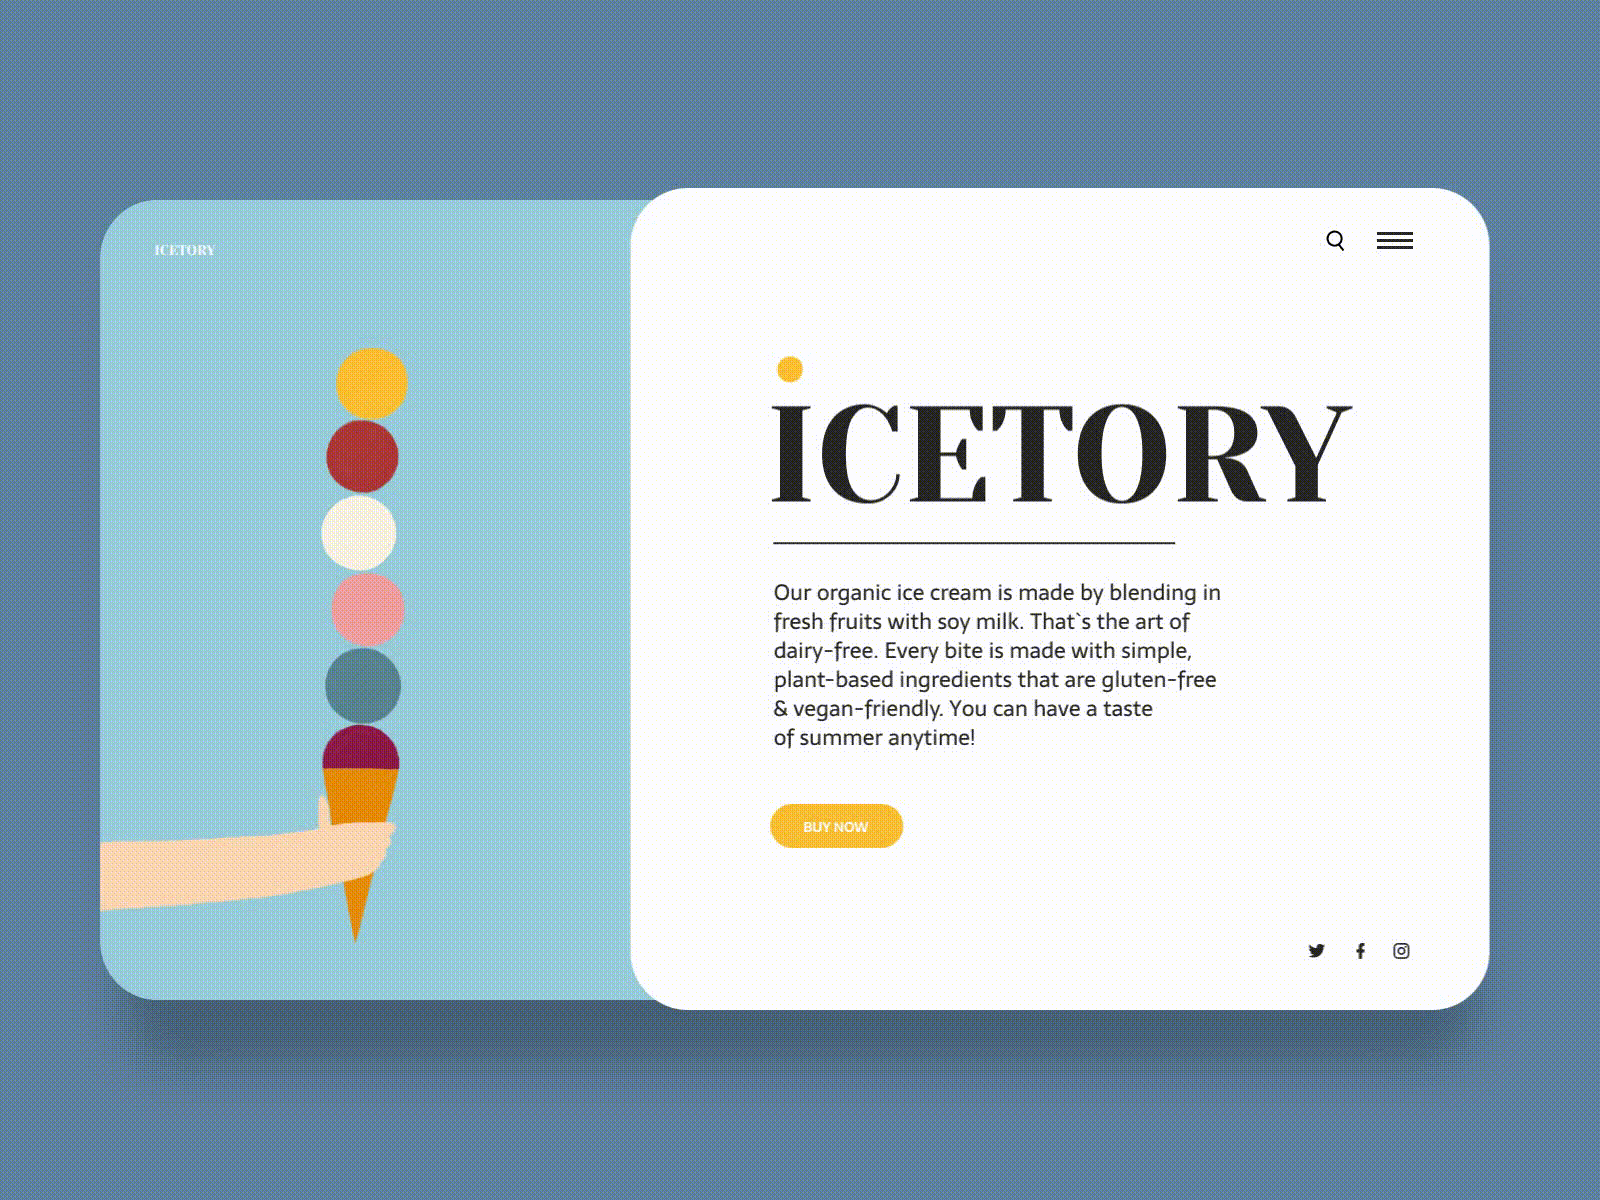 Ice cream shop "ICETORY" by Brightlab on Dribbble